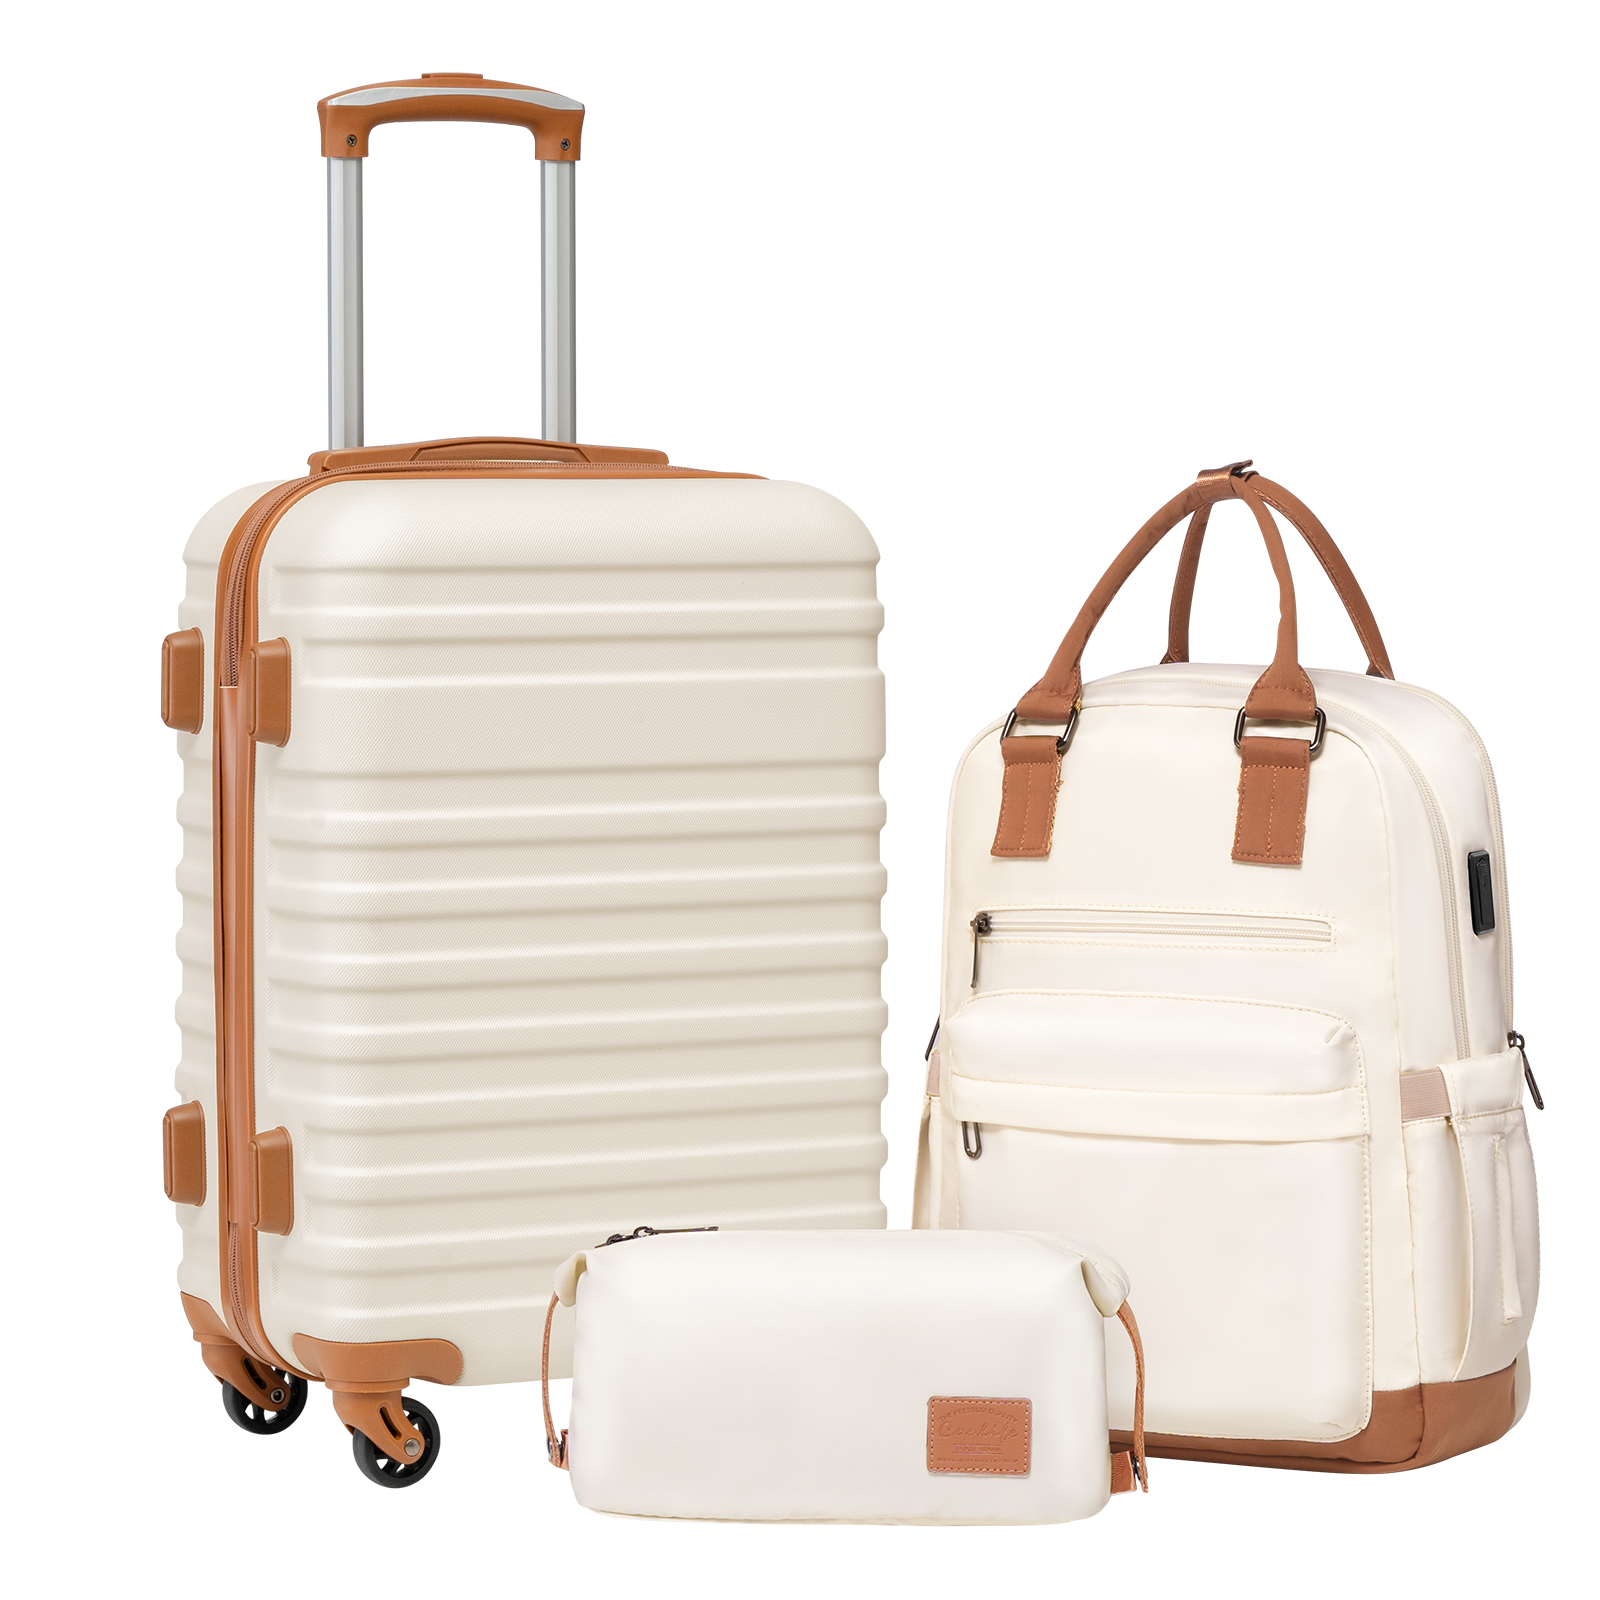 Coolife Luggage Sets Suitcase Set 3 Piece Luggage Set Carry On Hardside Luggage with TSA Lock Spinner Wheels (3 piece set (BP/TB/20))